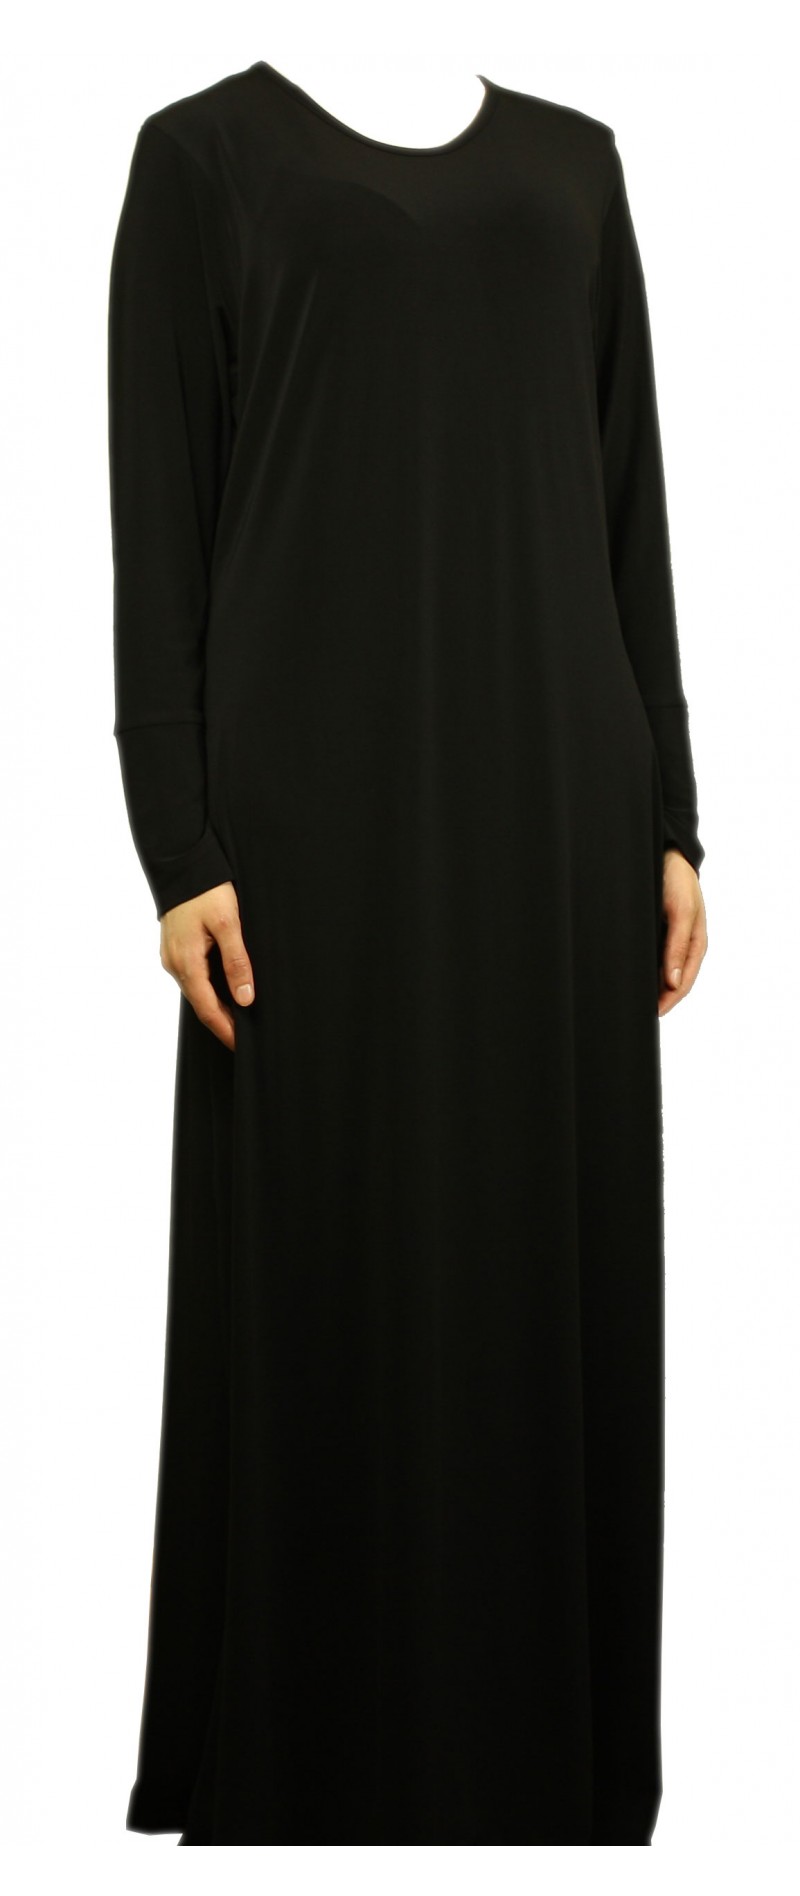 Plain Black Abaya - Size 56